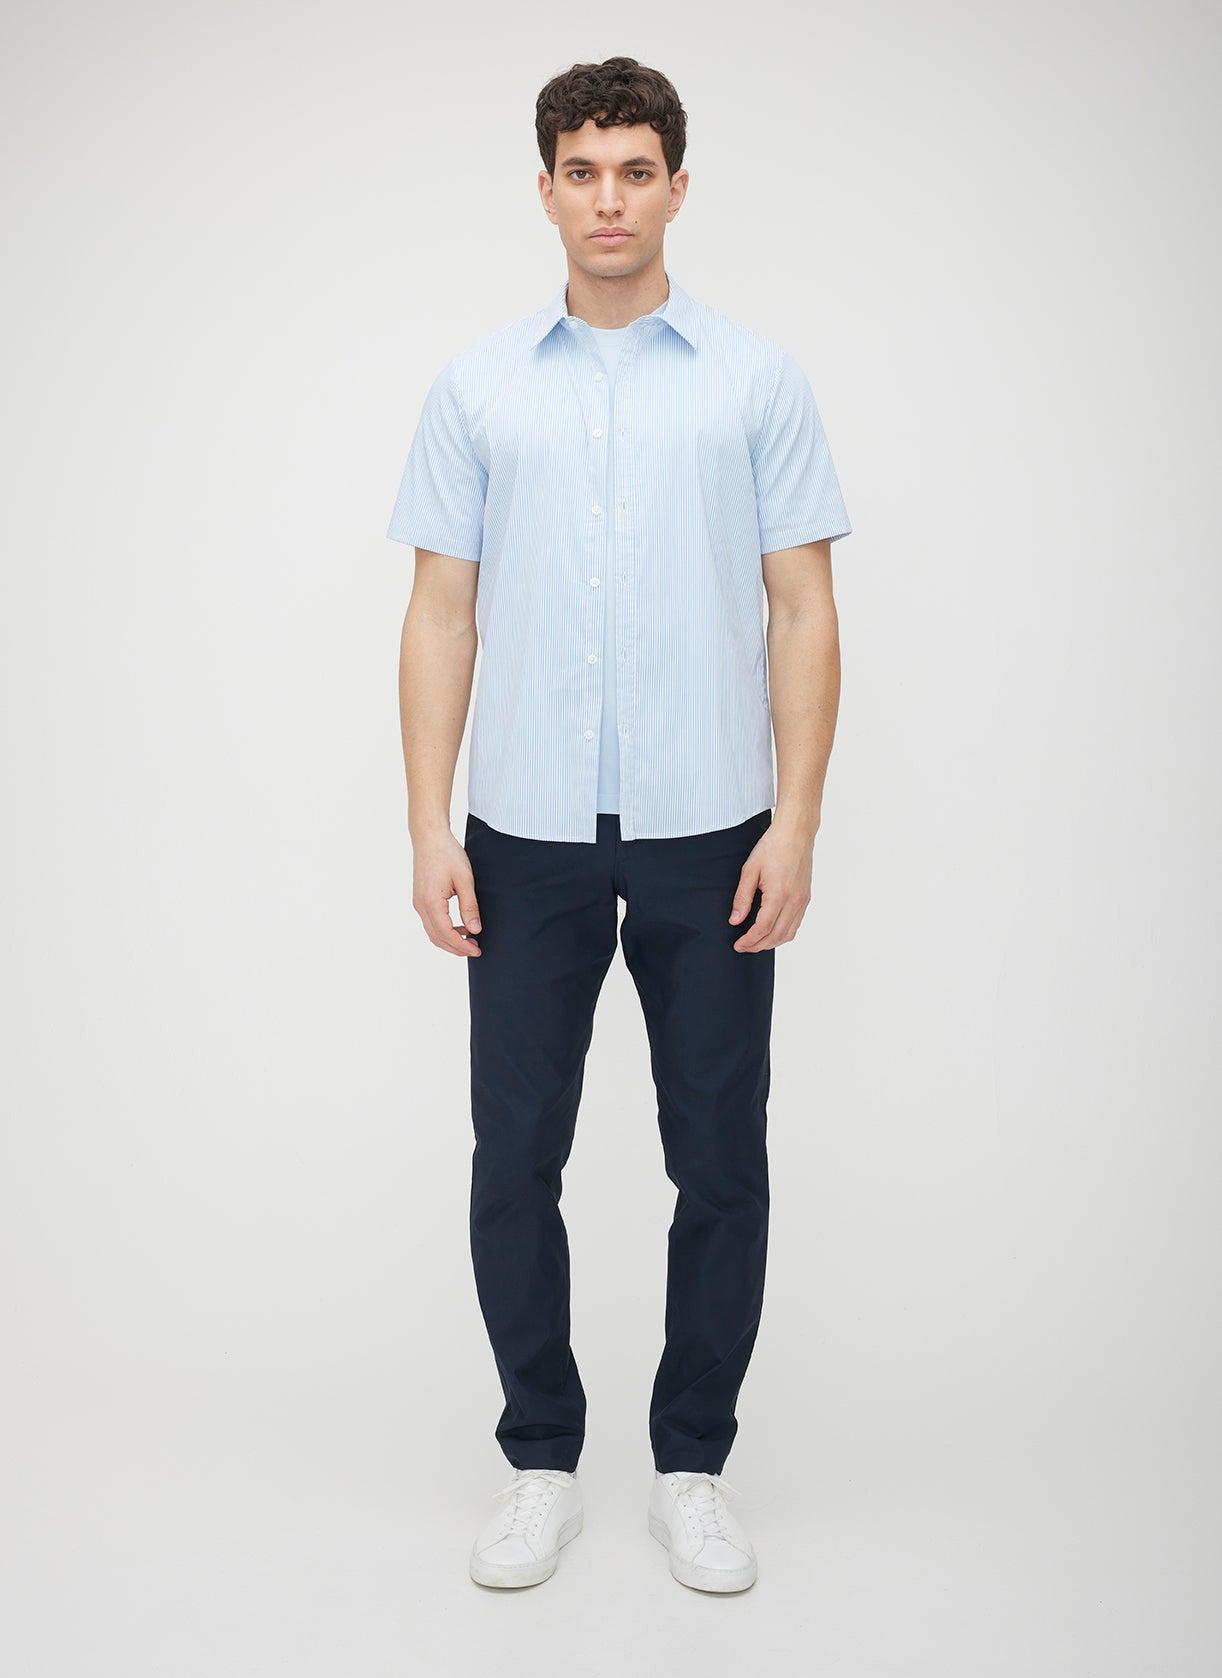 Kit and Ace — Acadia Short Sleeve Poplin Shirt